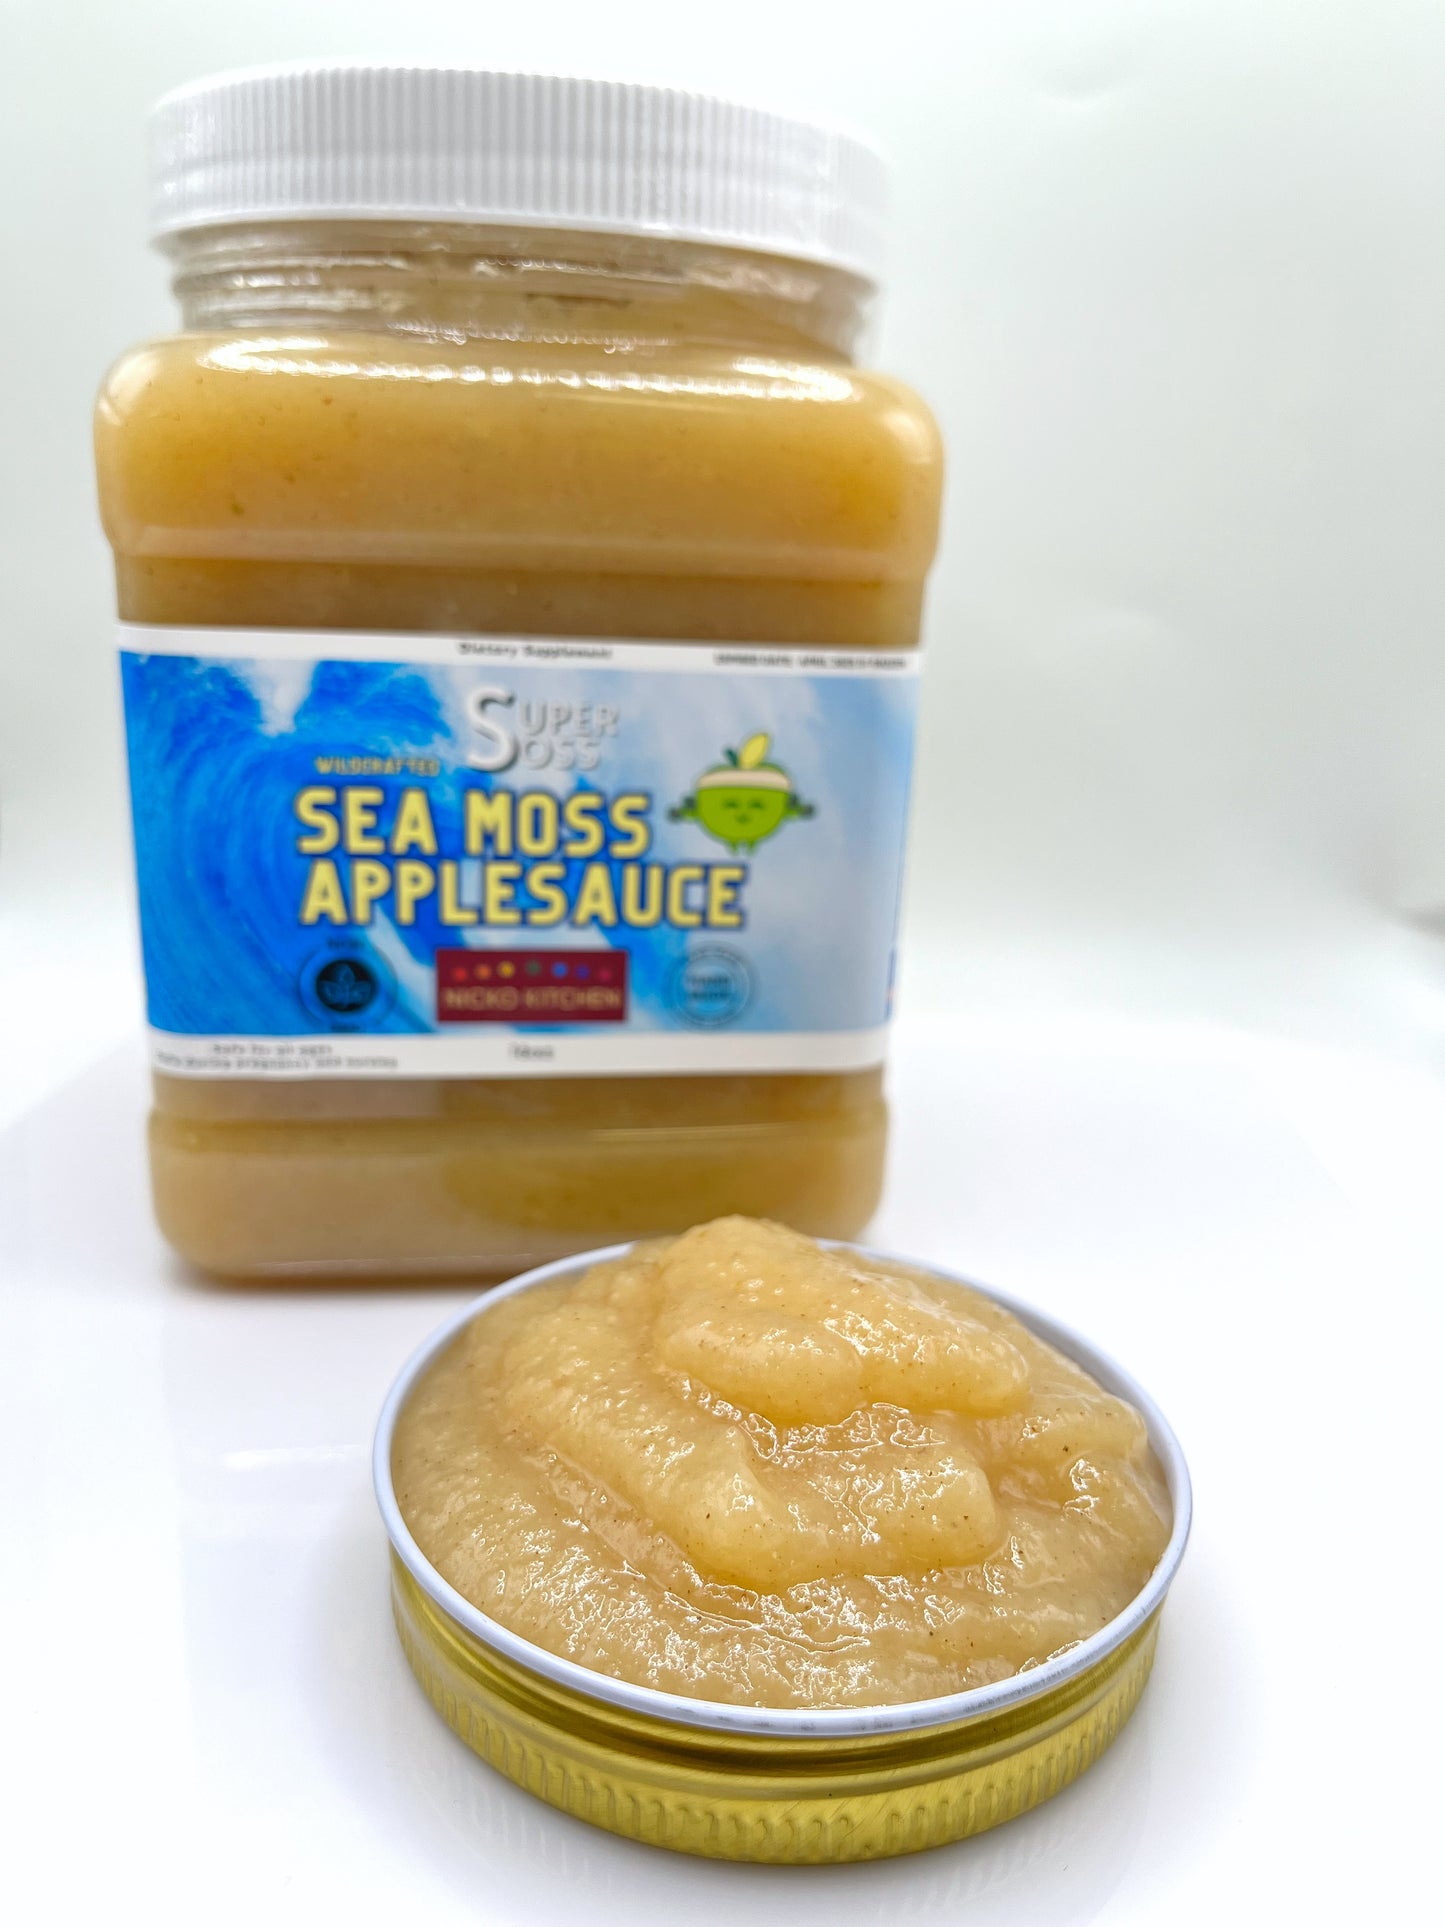 SuperSoss Sea Moss Gel Applesauce Snack | 32 oz Jar |  Recurring Delivery